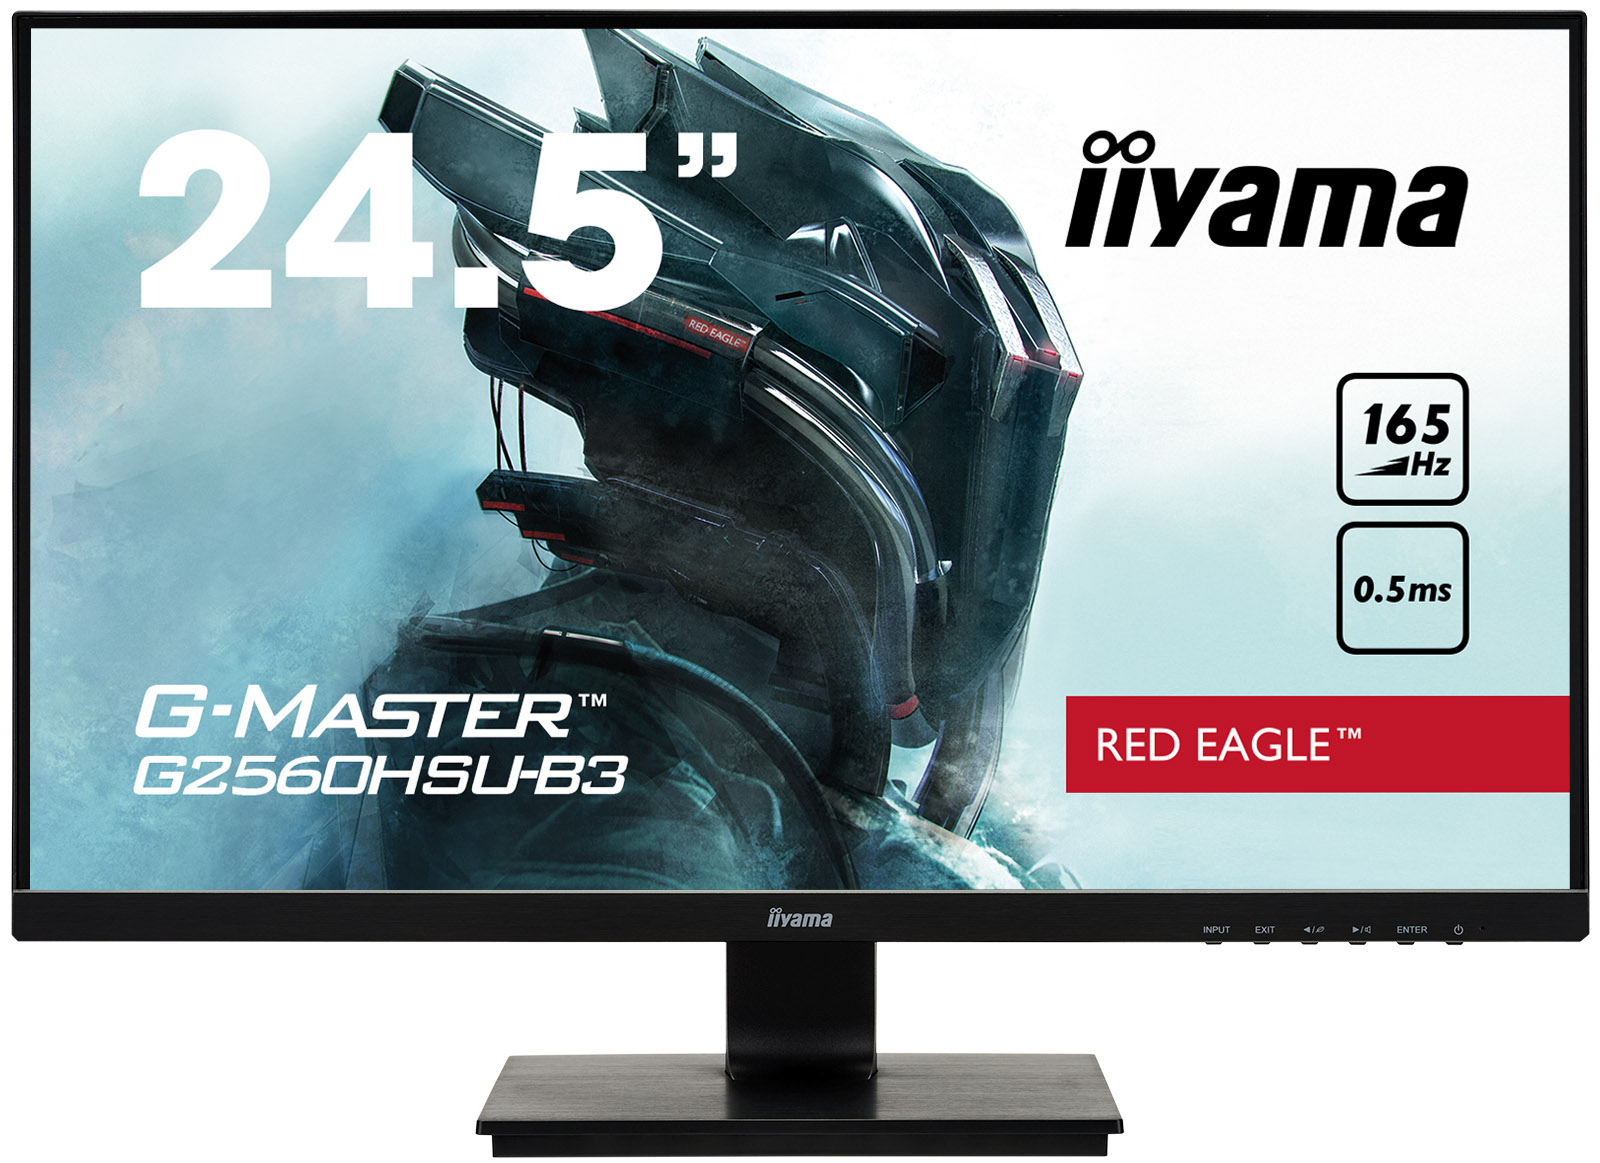 Iiyama G-MASTER G2560HSU-B3 RED EAGLE | 25" (62,2cm) | 165Hz | LED | Gaming Monitor